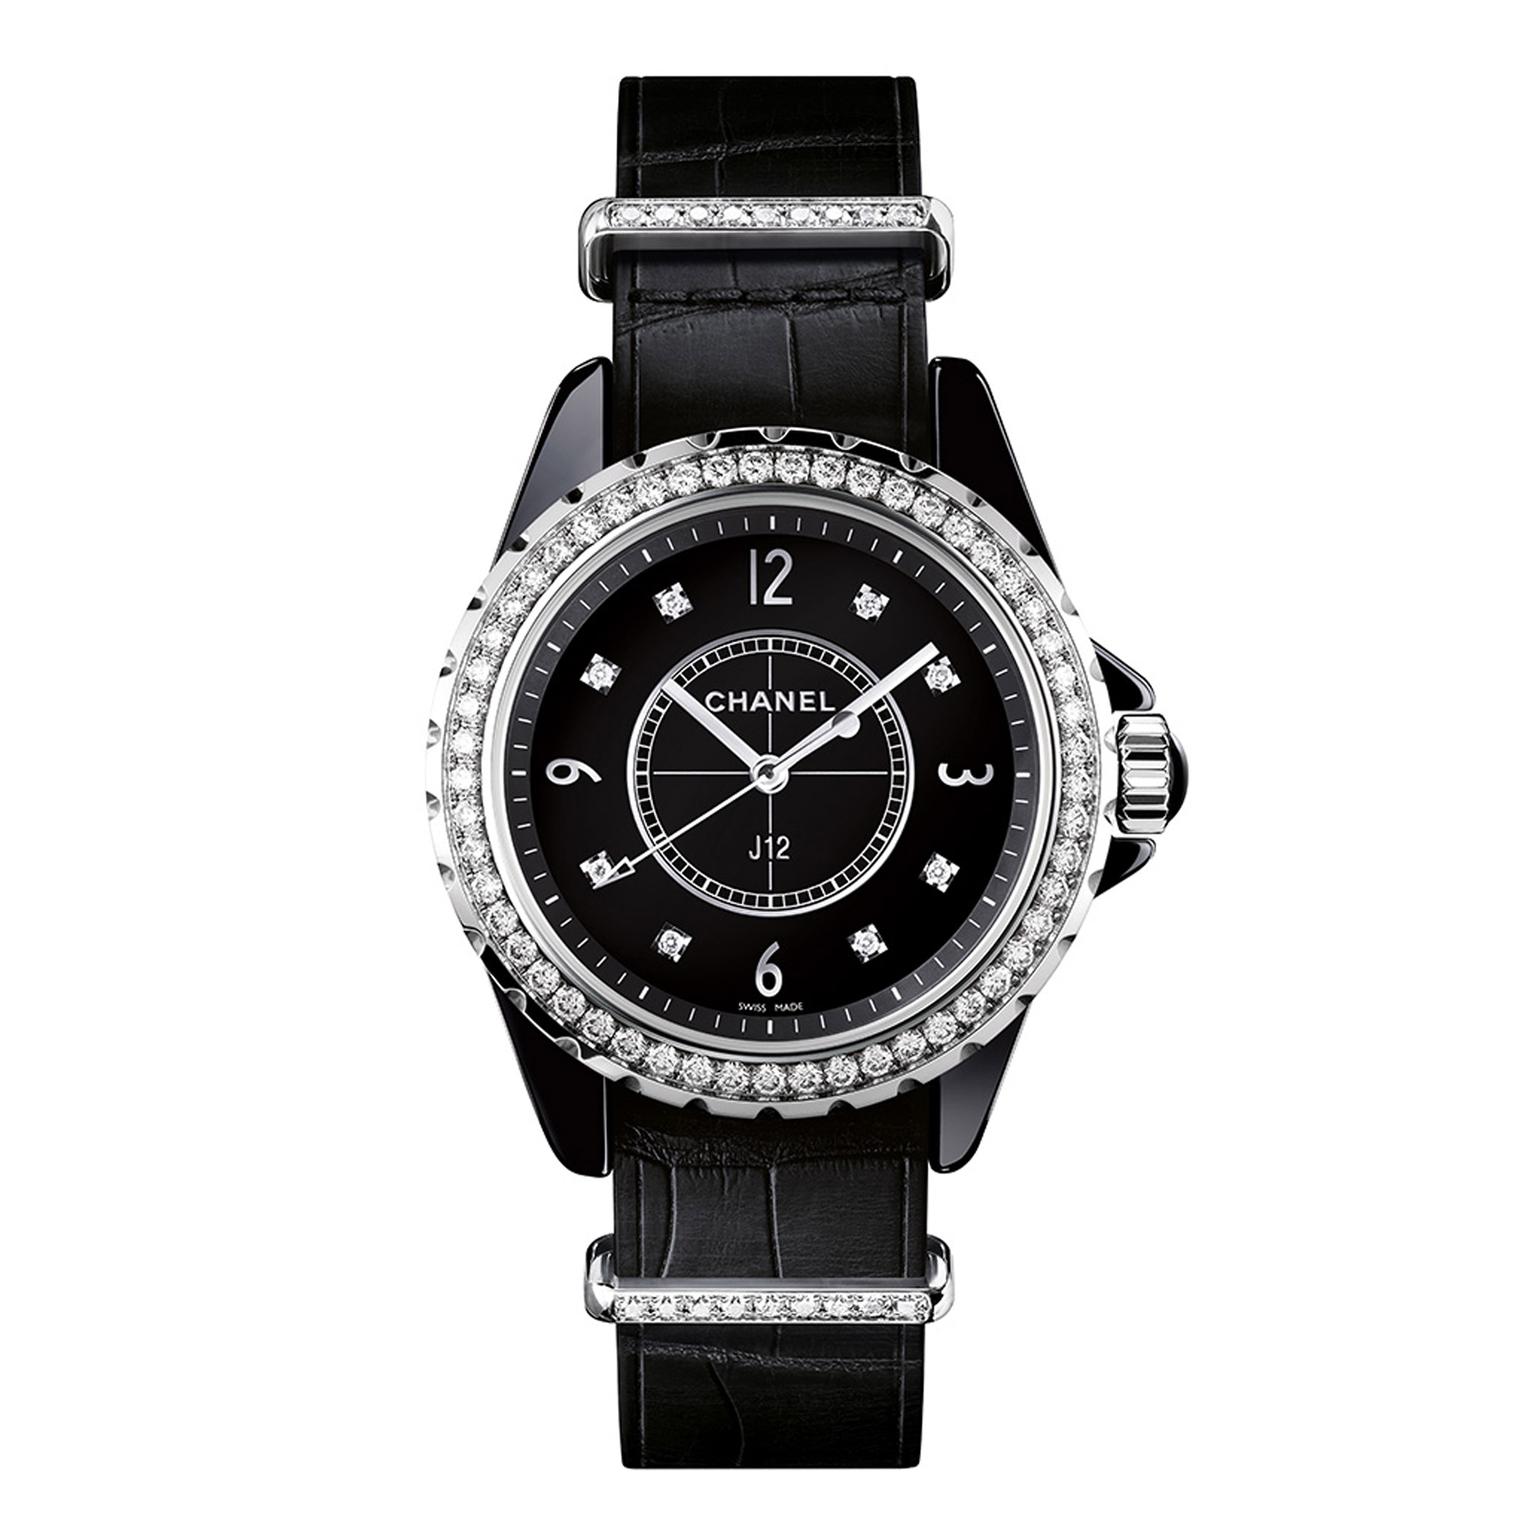 J12-G10 black ceramic and diamond watch, Chanel